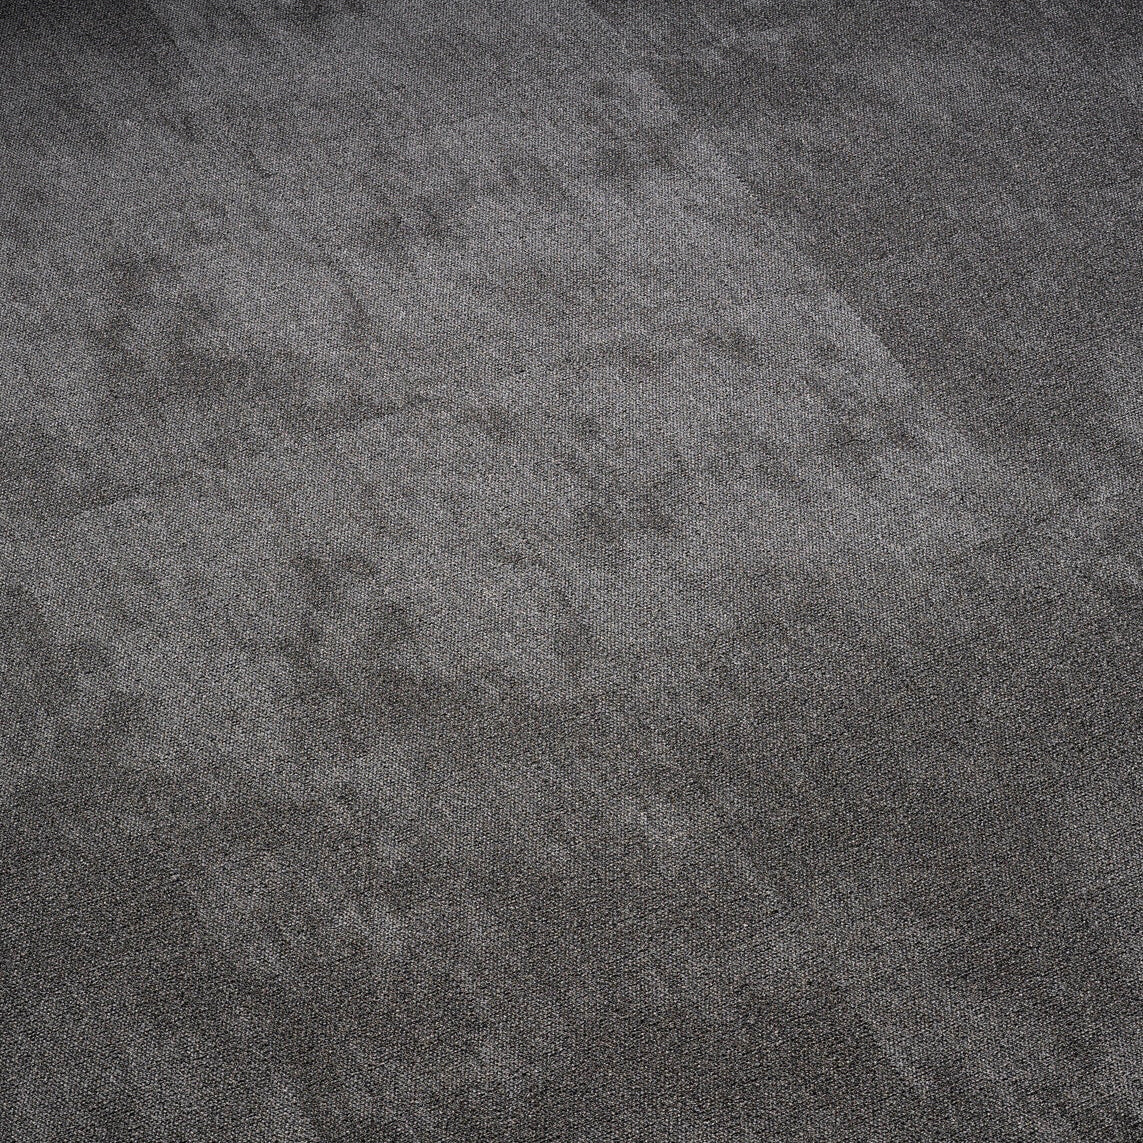 Plusfloor Sidewalk Broadway Shad carpet tiles for offices 100% Nylon